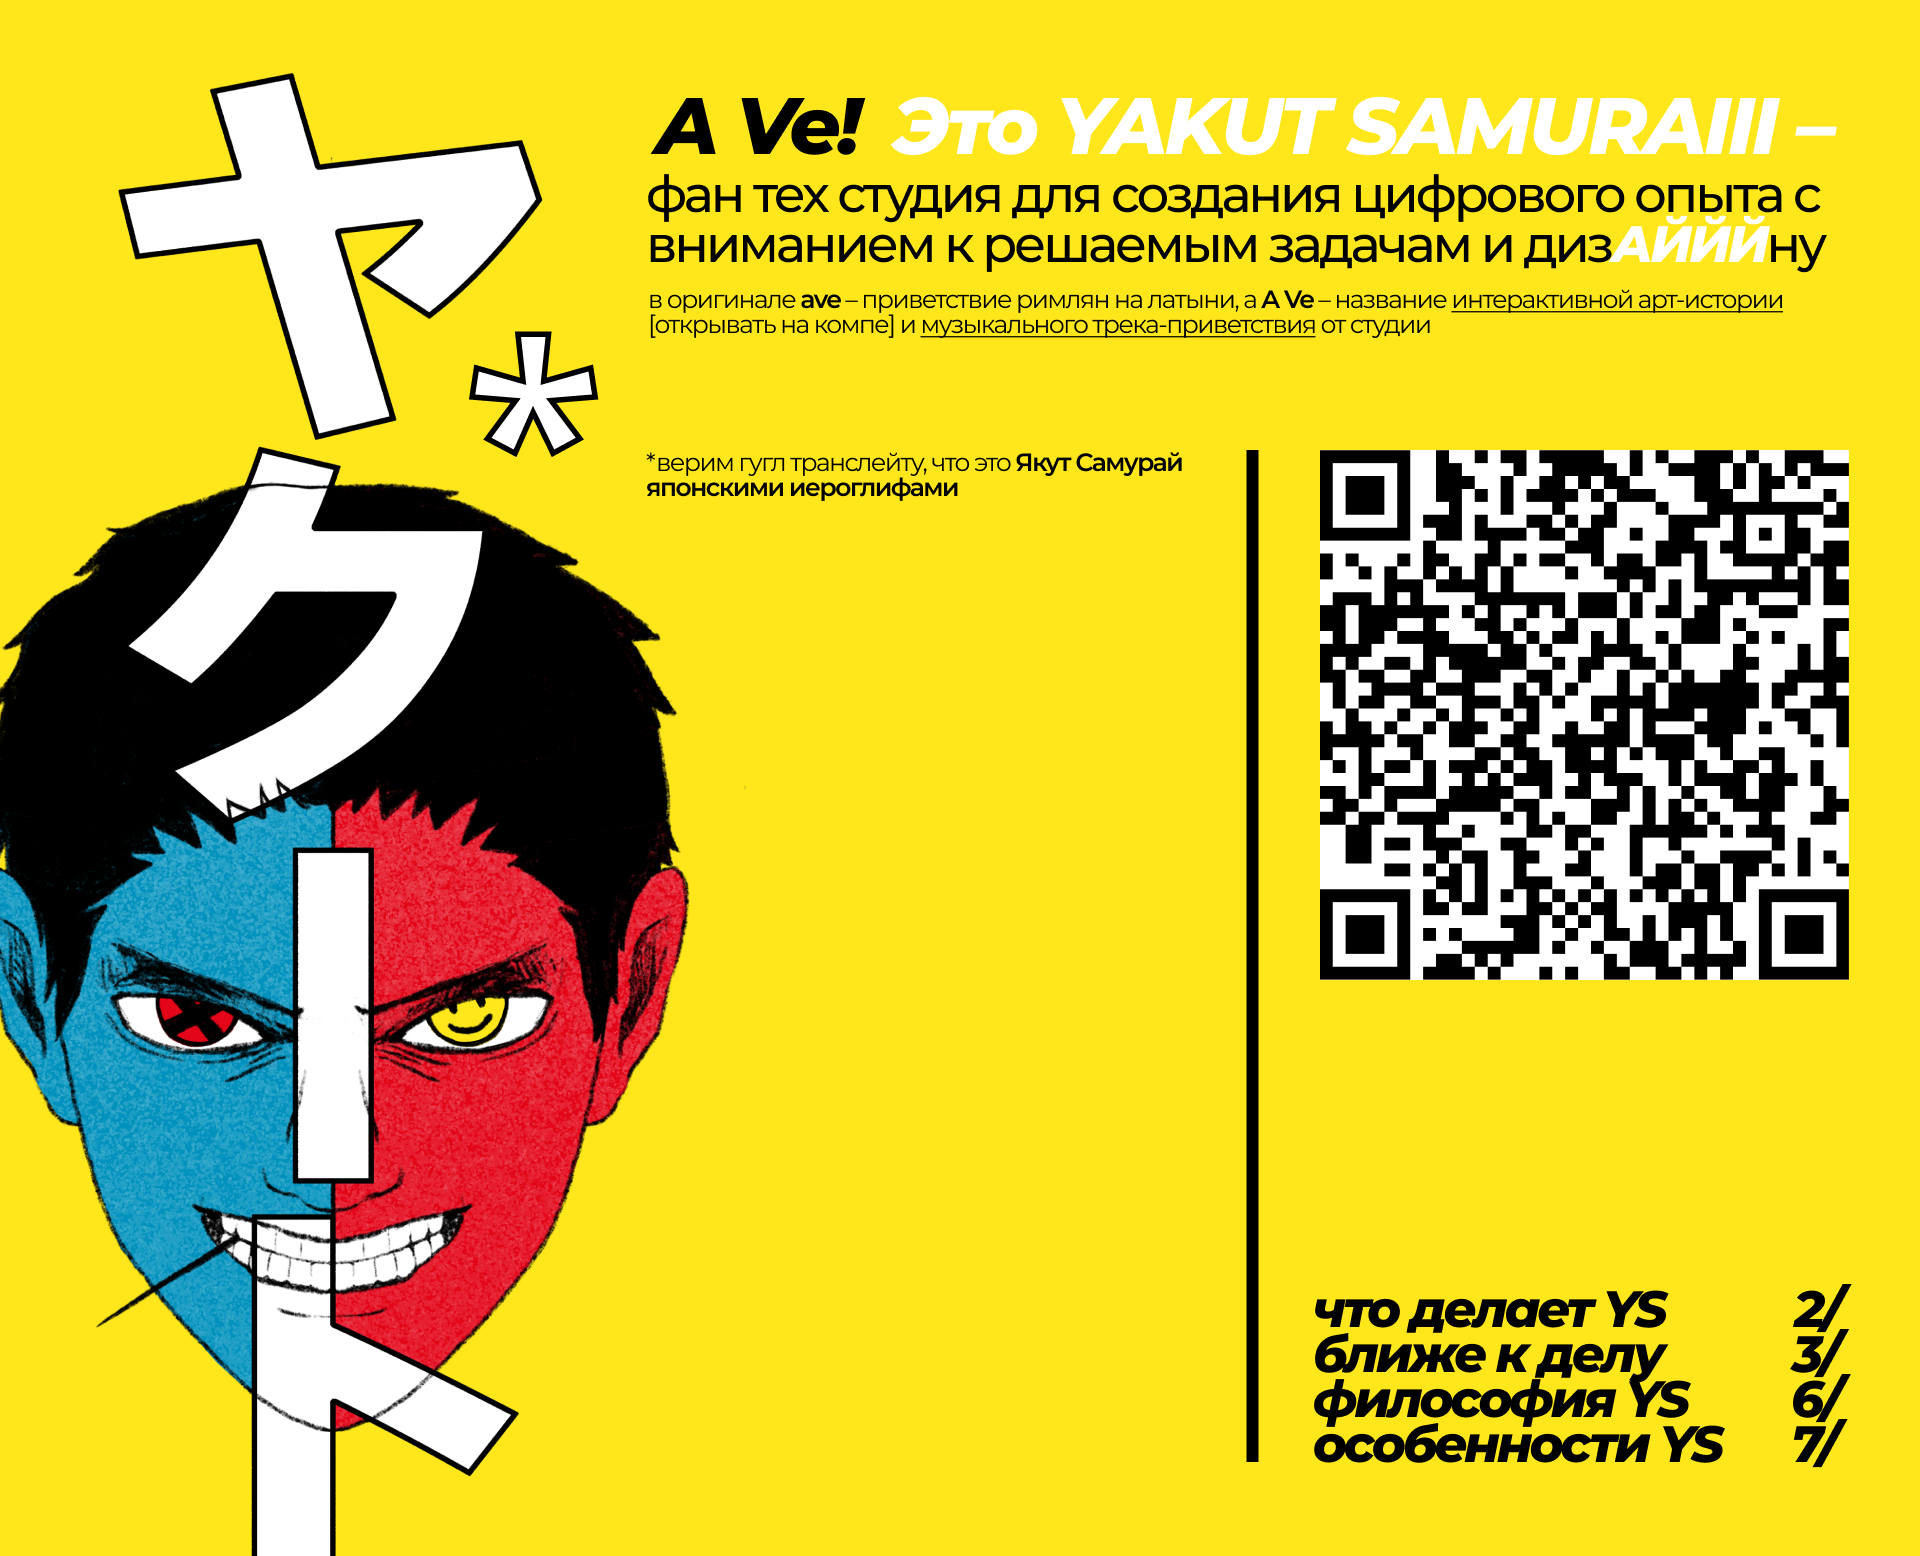 Презентация Yakut Samuraiii на Dprofile